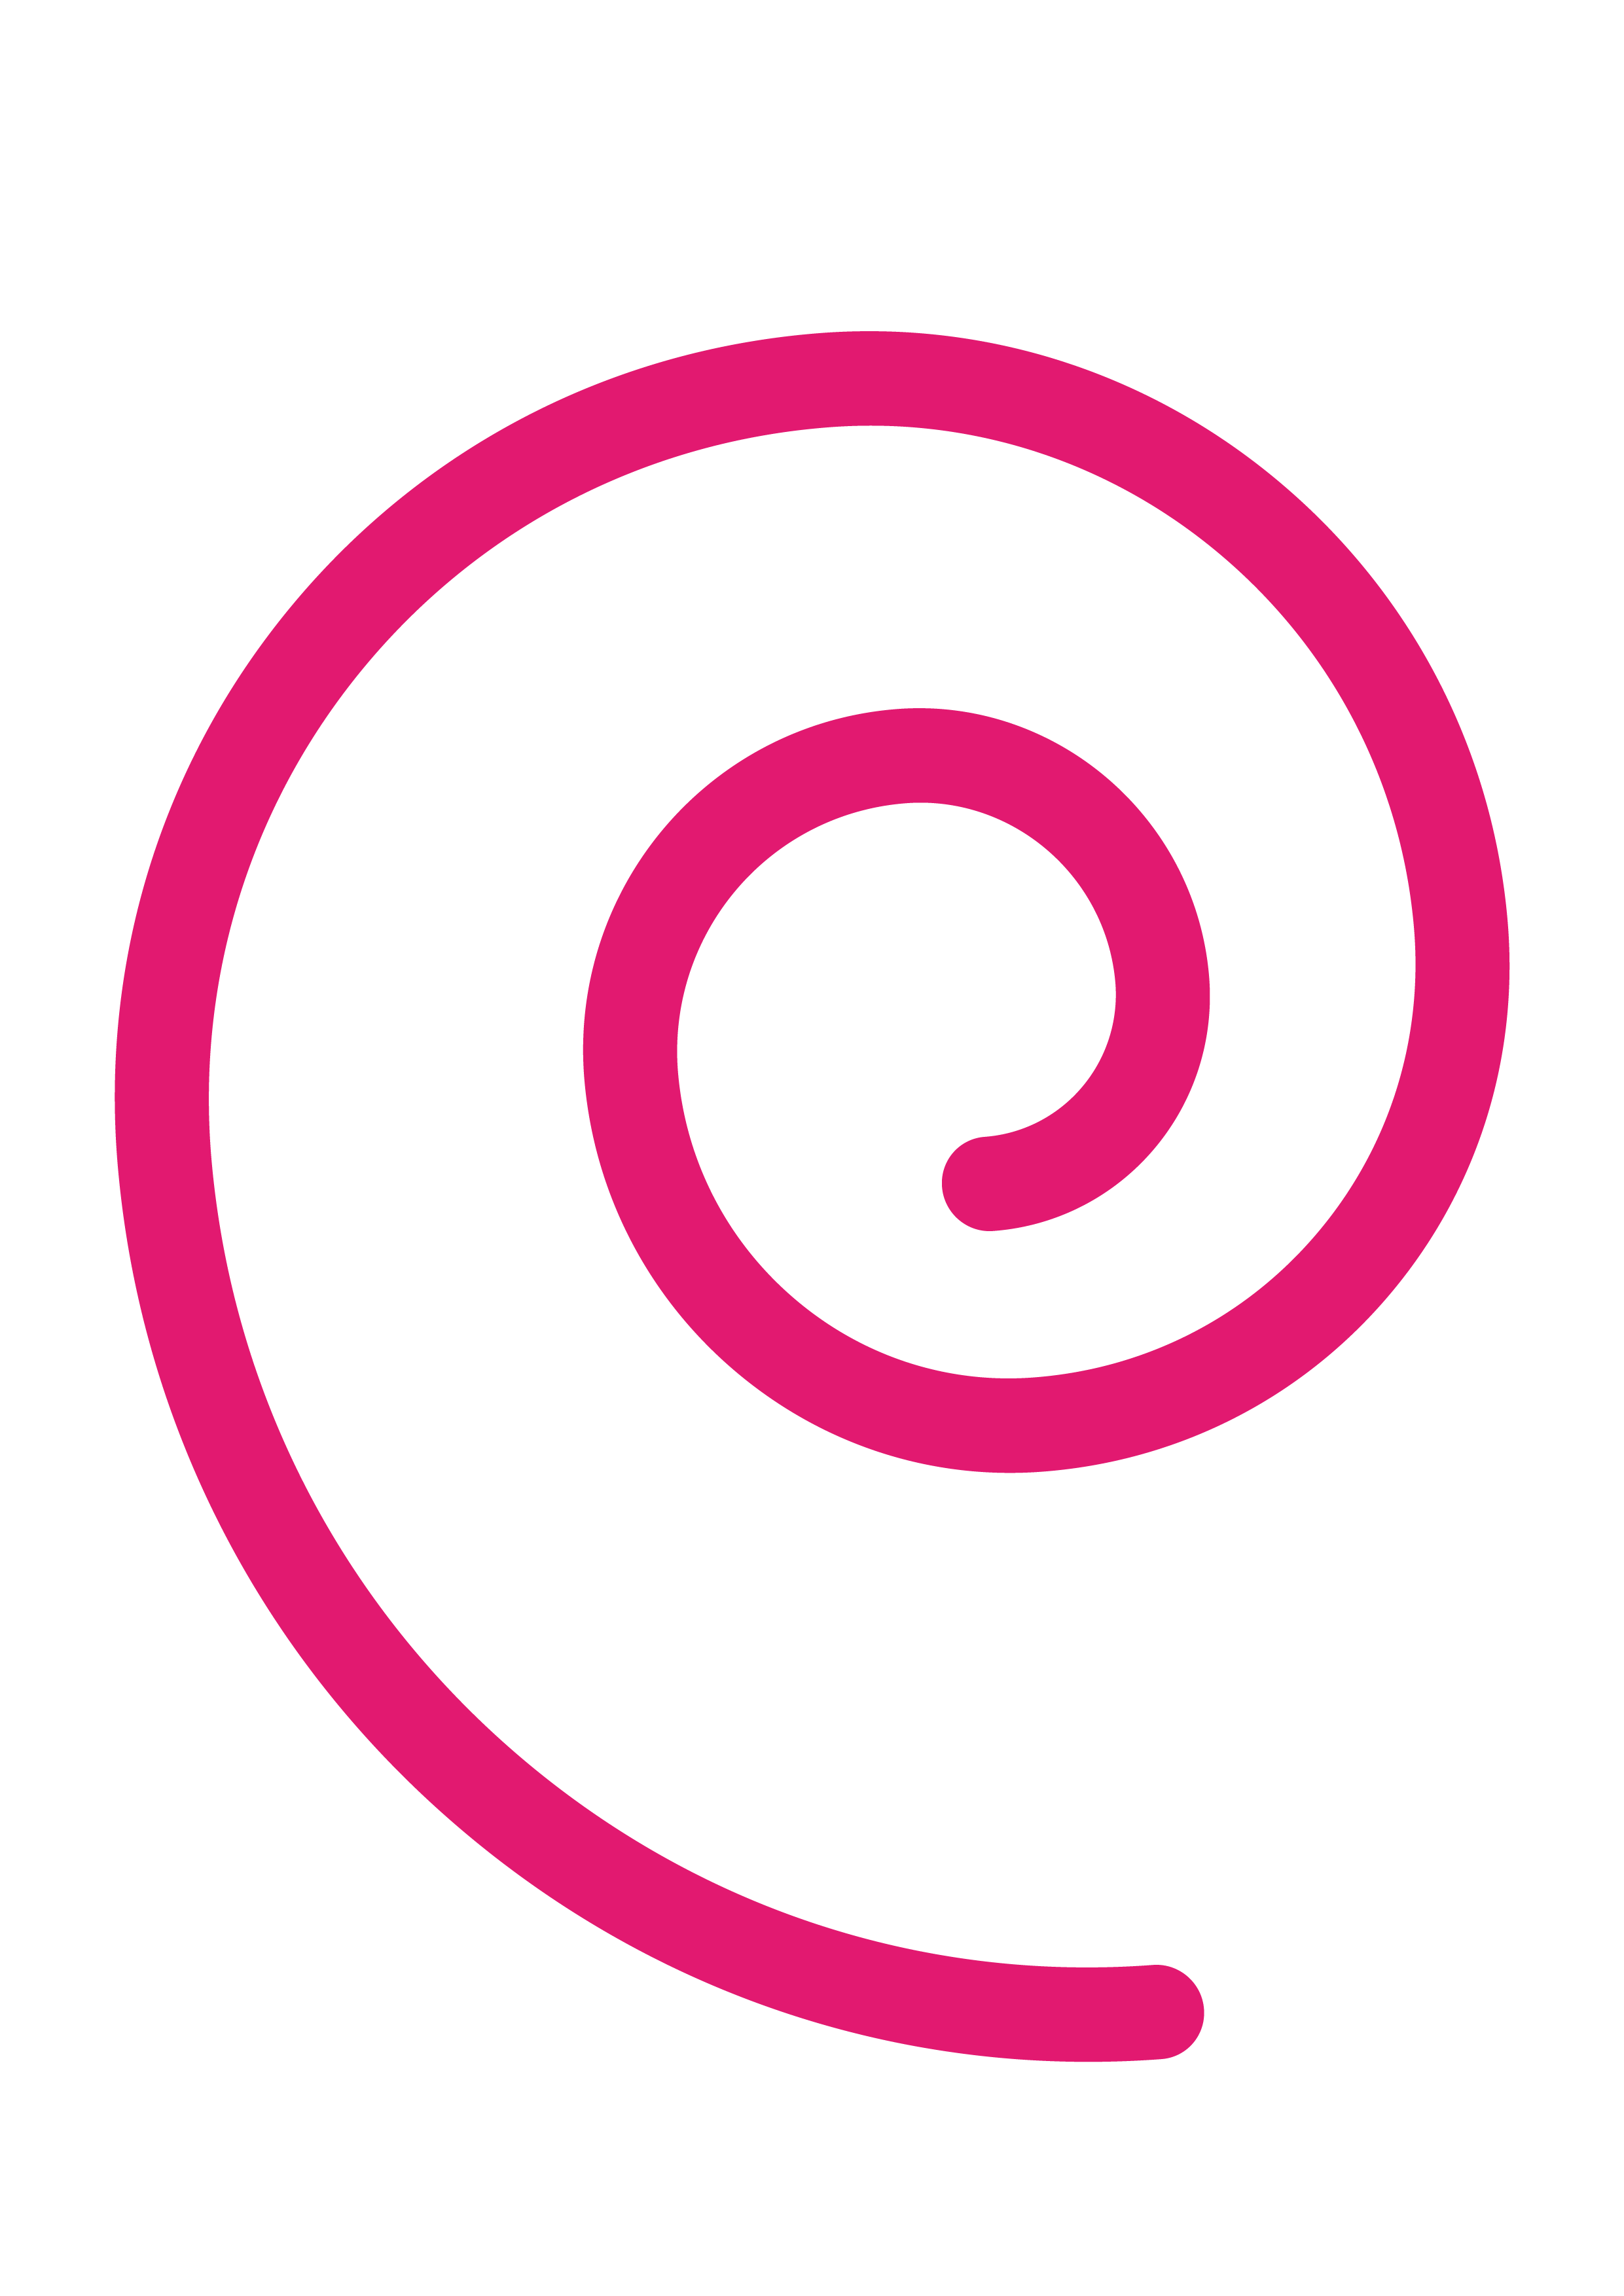 a large pink spiral